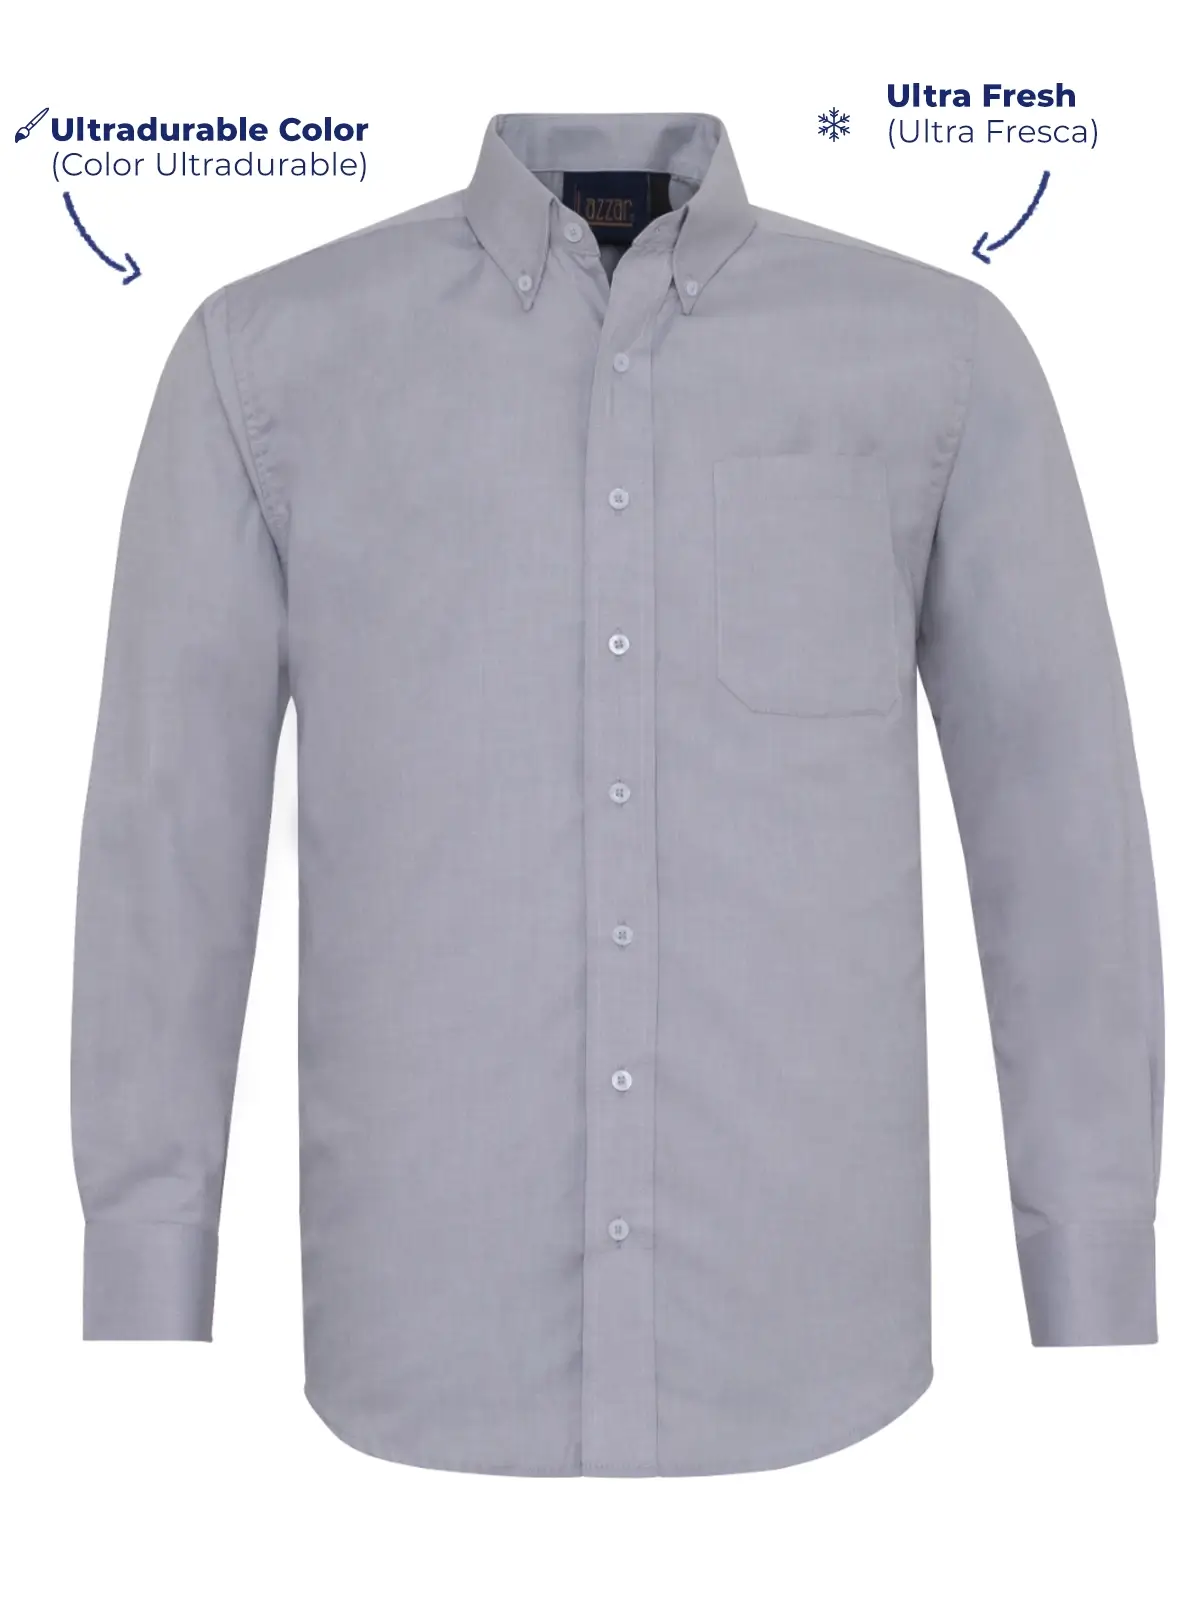 Long sleeve gray oxford shirts